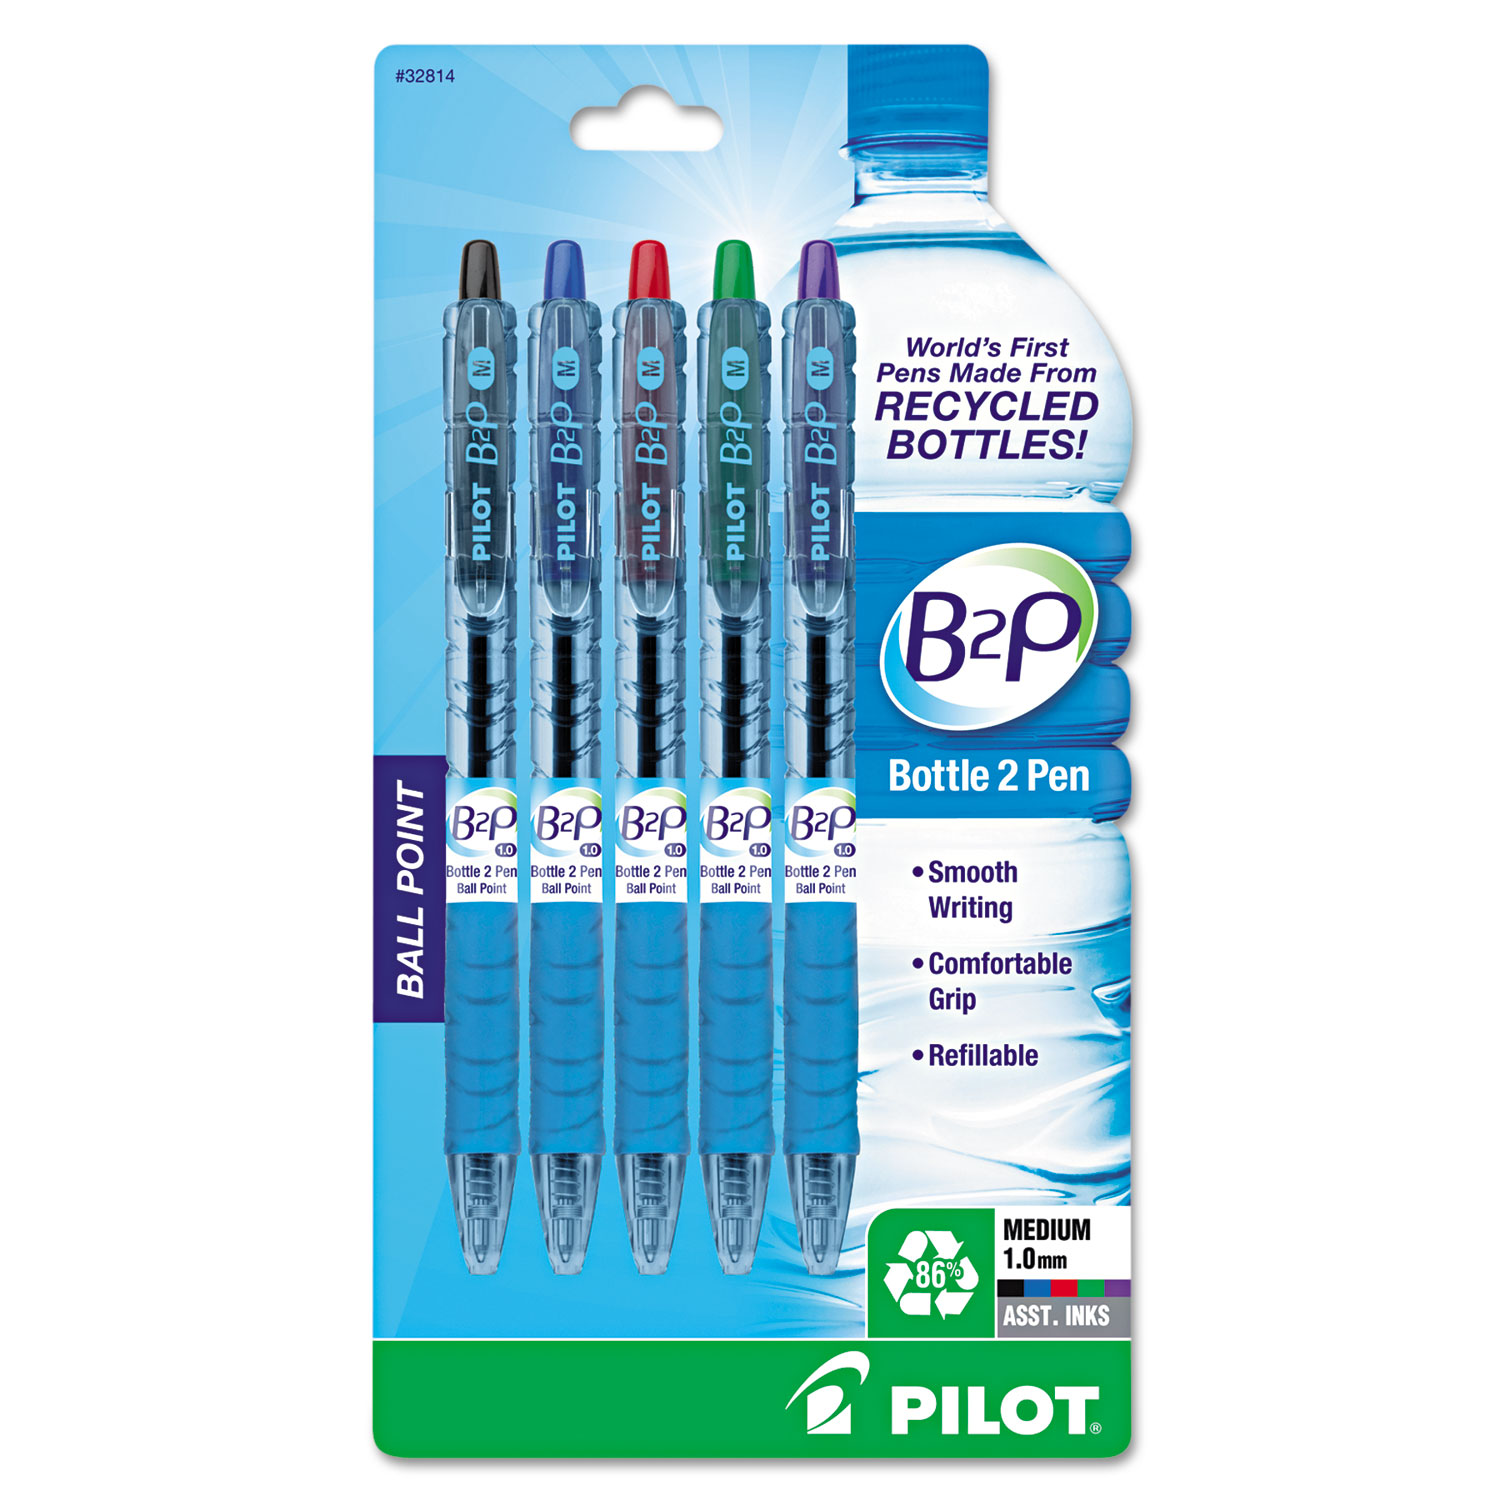 Pilot® B2P Bottle-2-Pen Recycled Retractable Ballpoint Pen, 1mm, Assorted Ink, 5/Pack